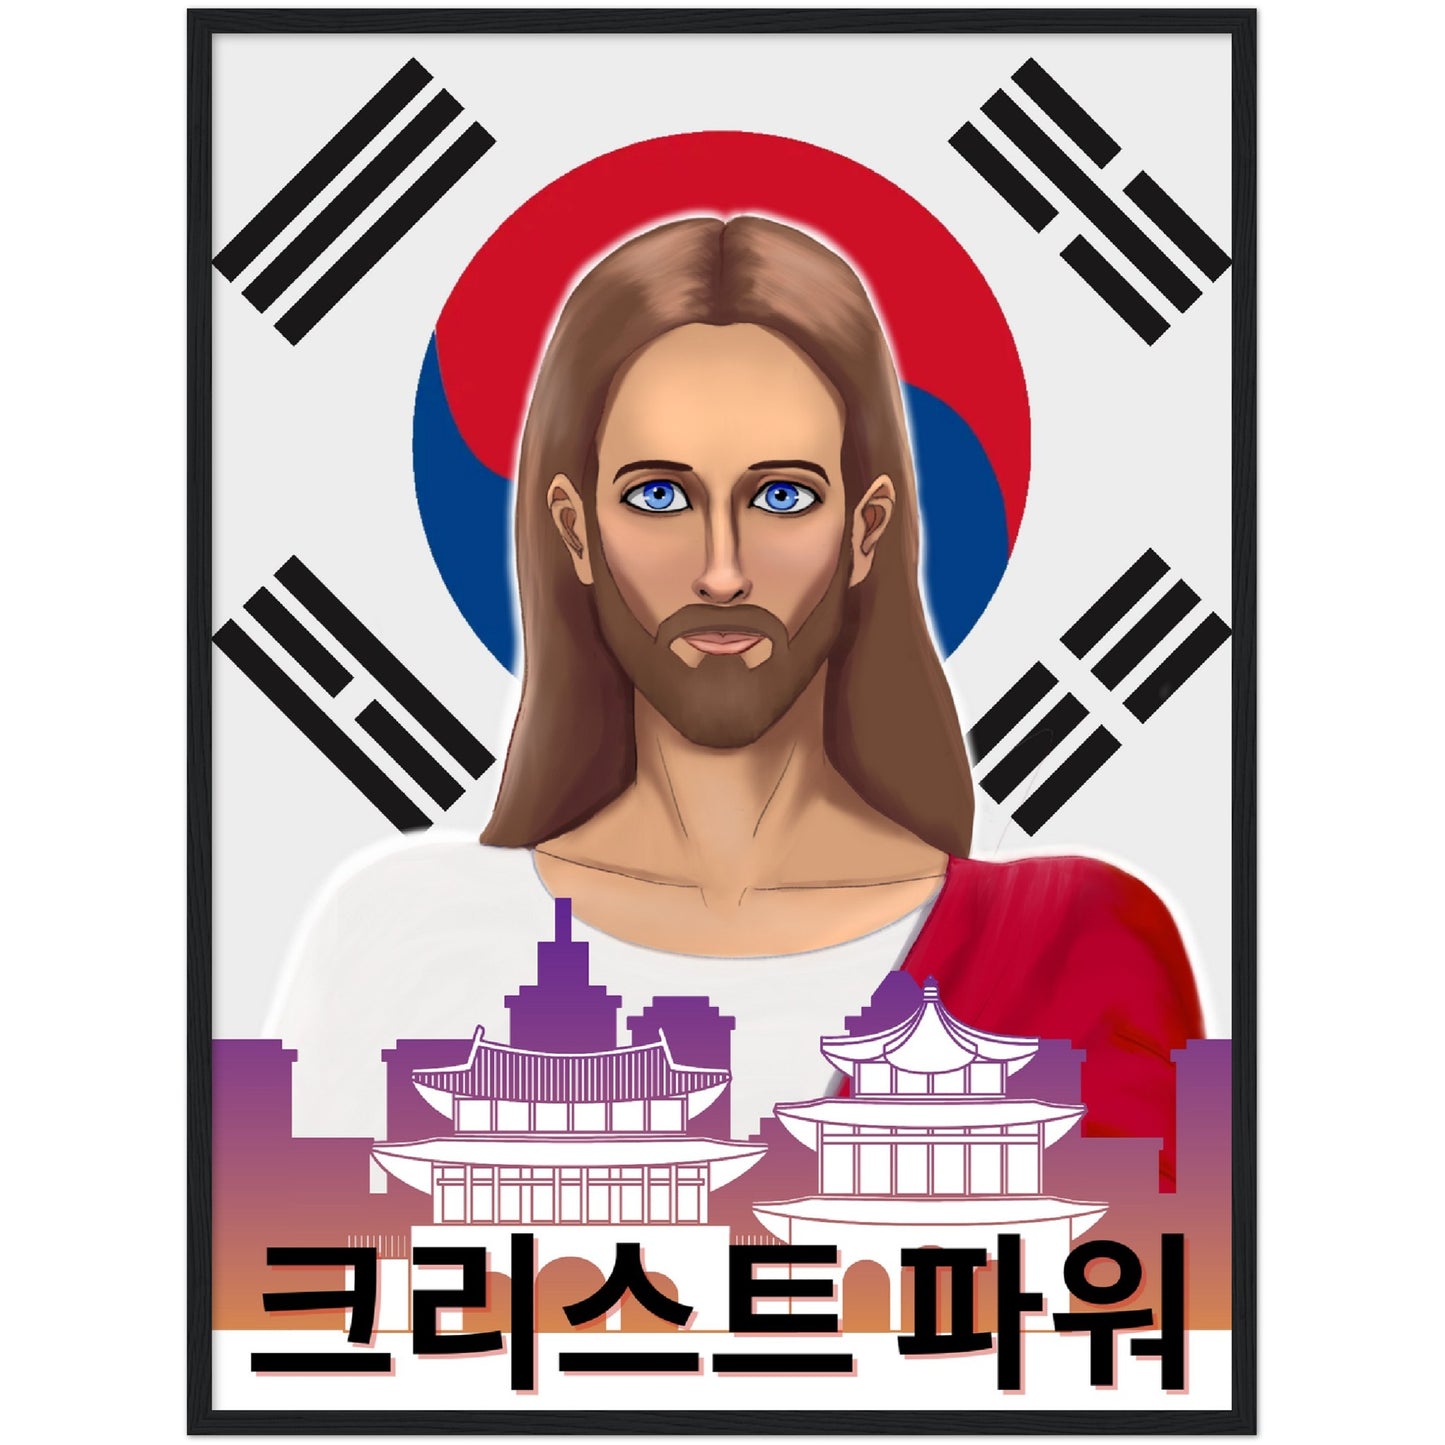 Christ Power South Korea Wall Art